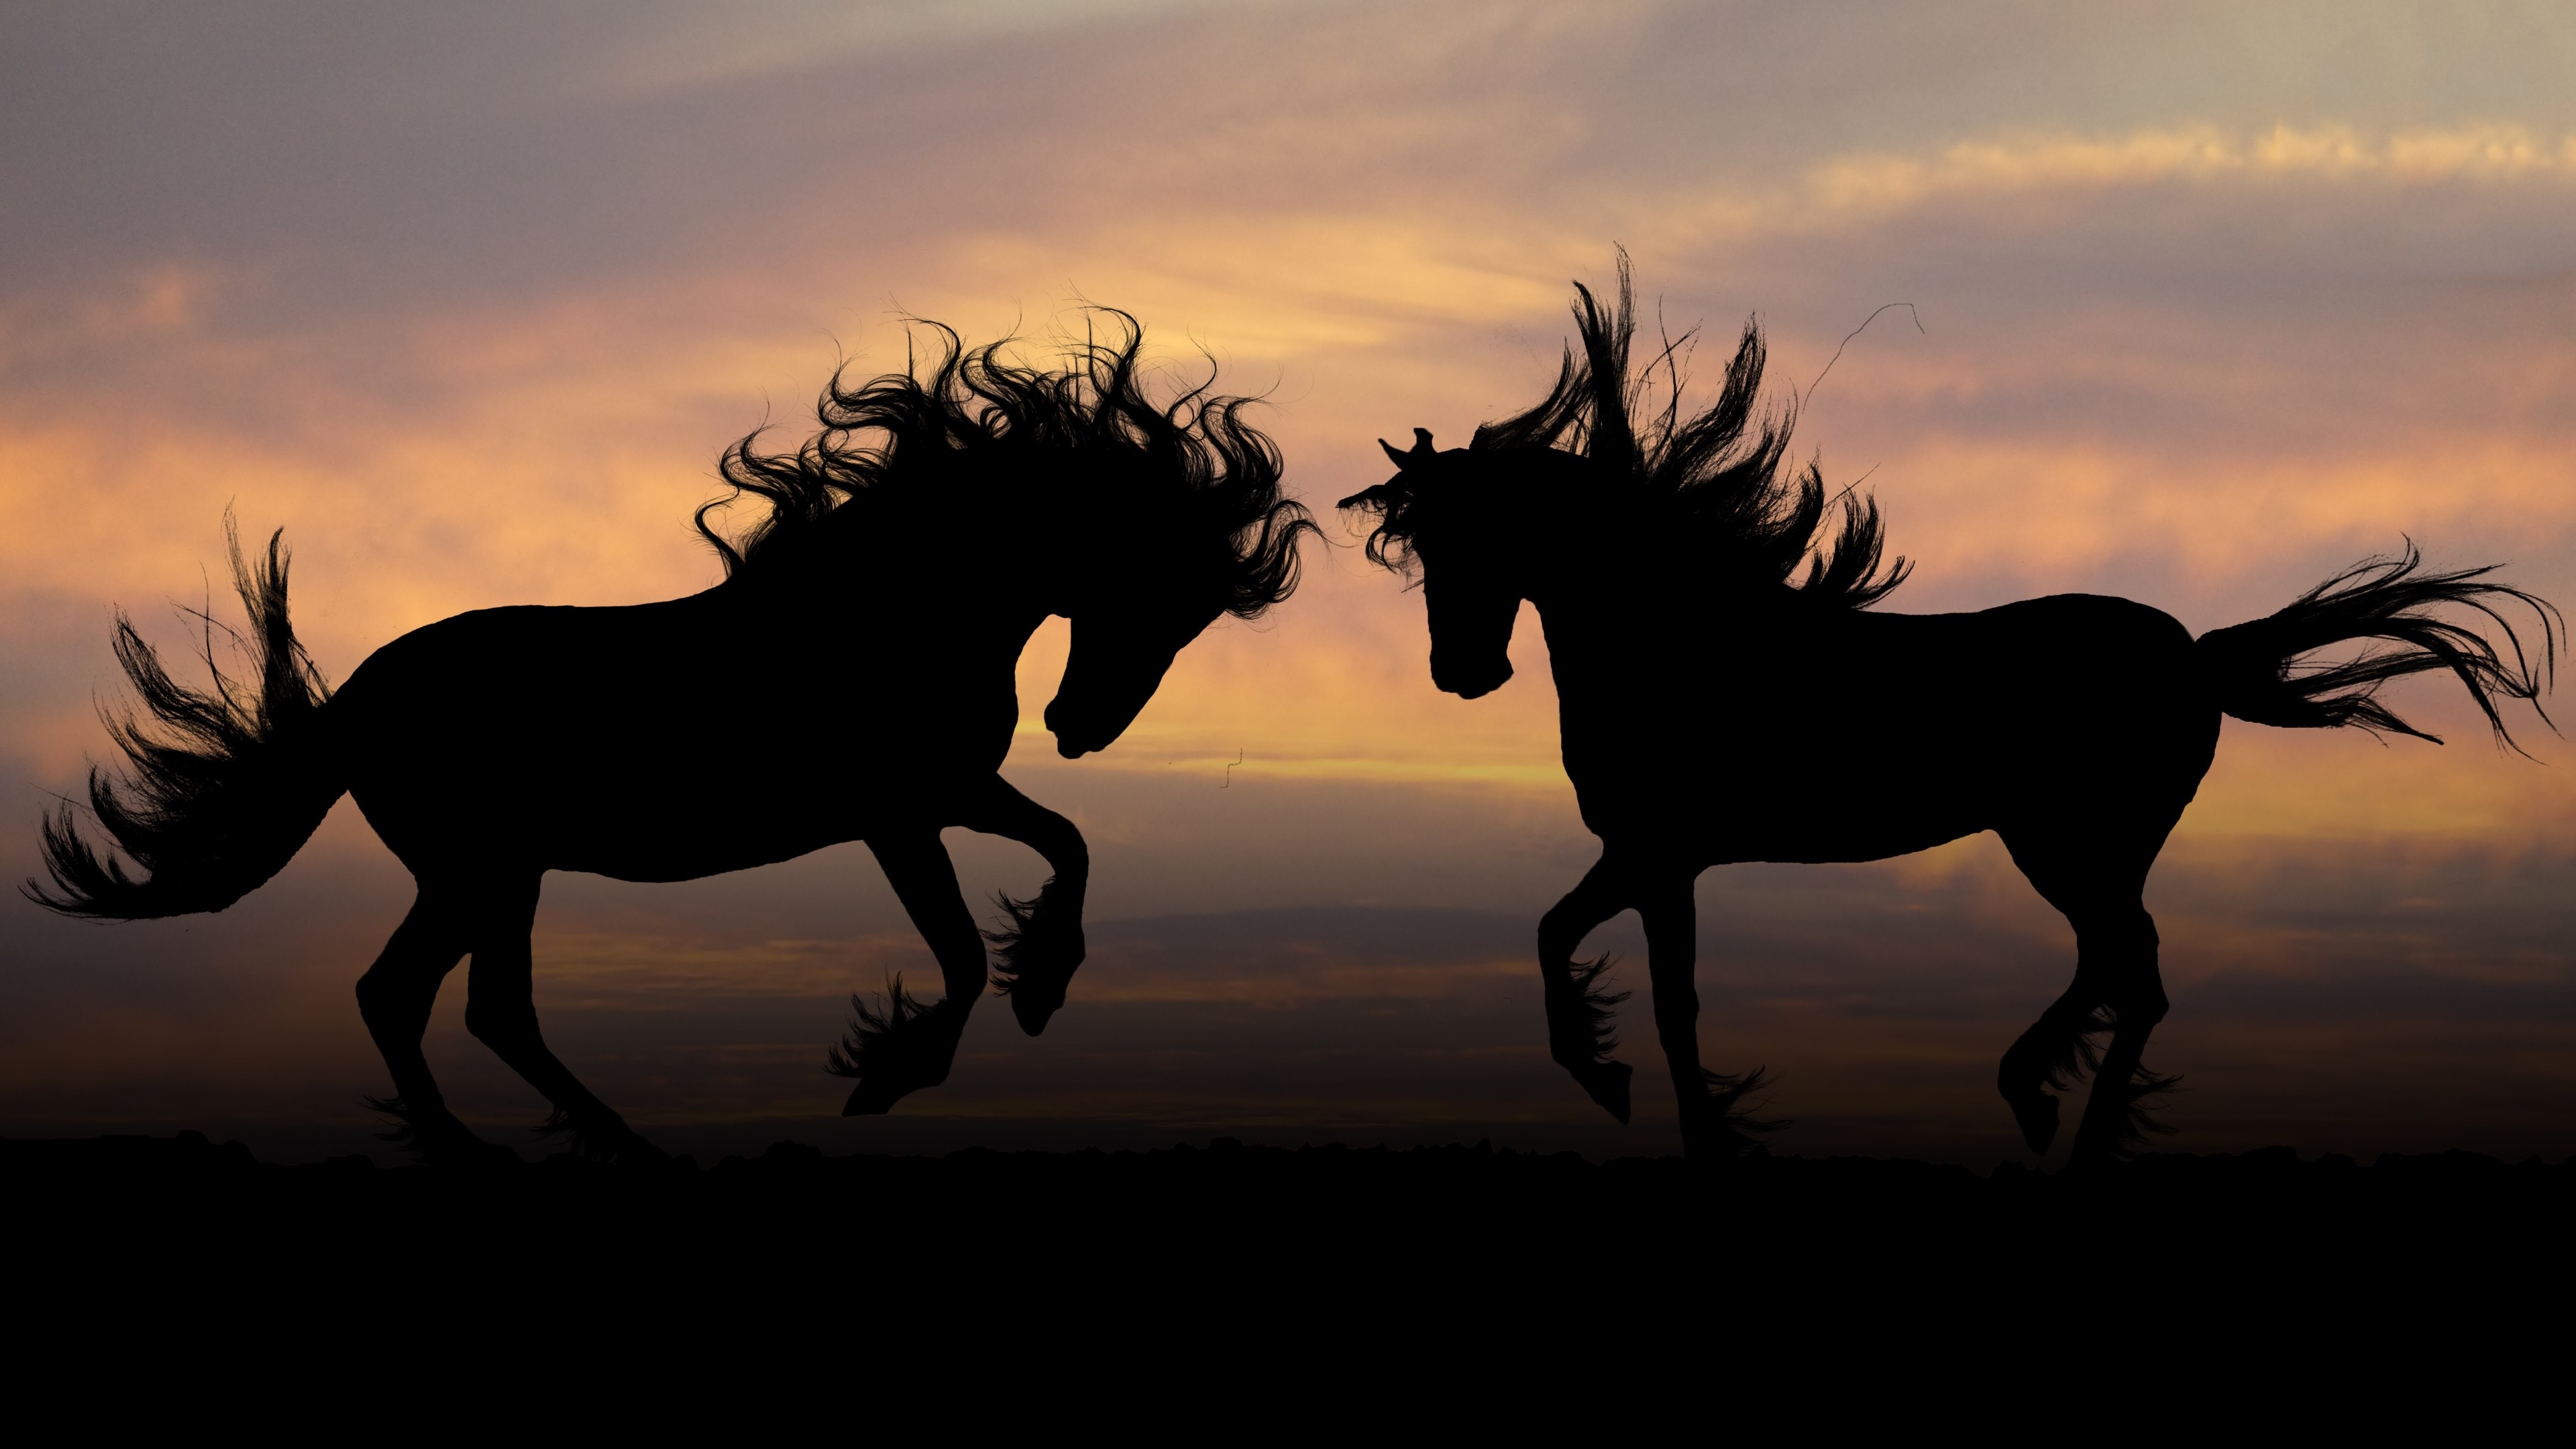 3840x2160 Wallpaper: Horse Silhouettes. Ultra HD 4K 